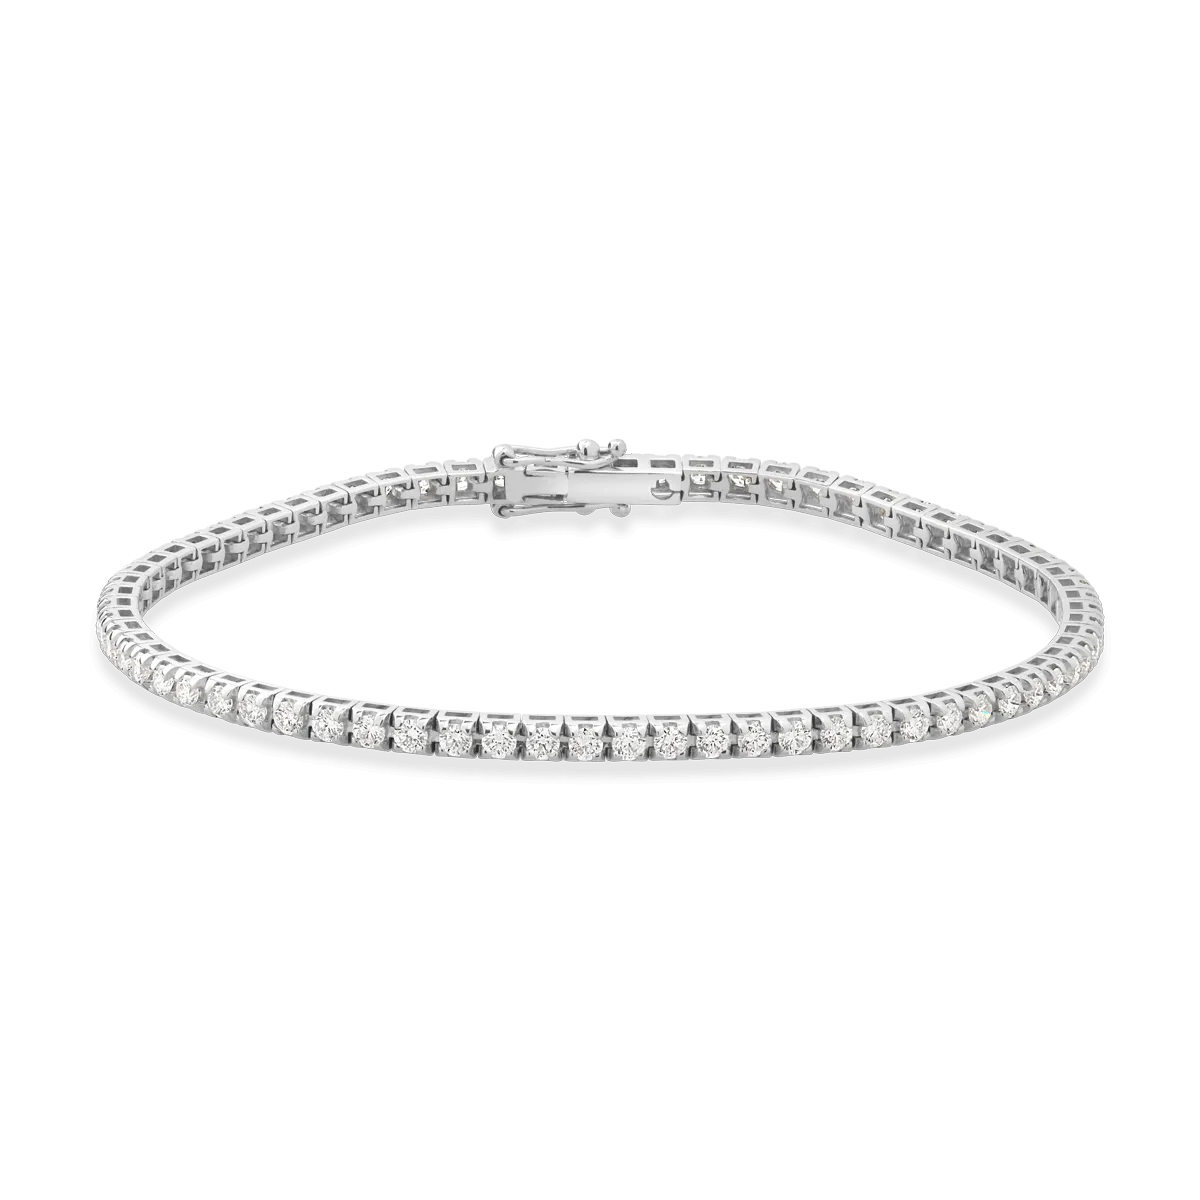 18K white gold tennis bracelet with 1.46ct diamonds